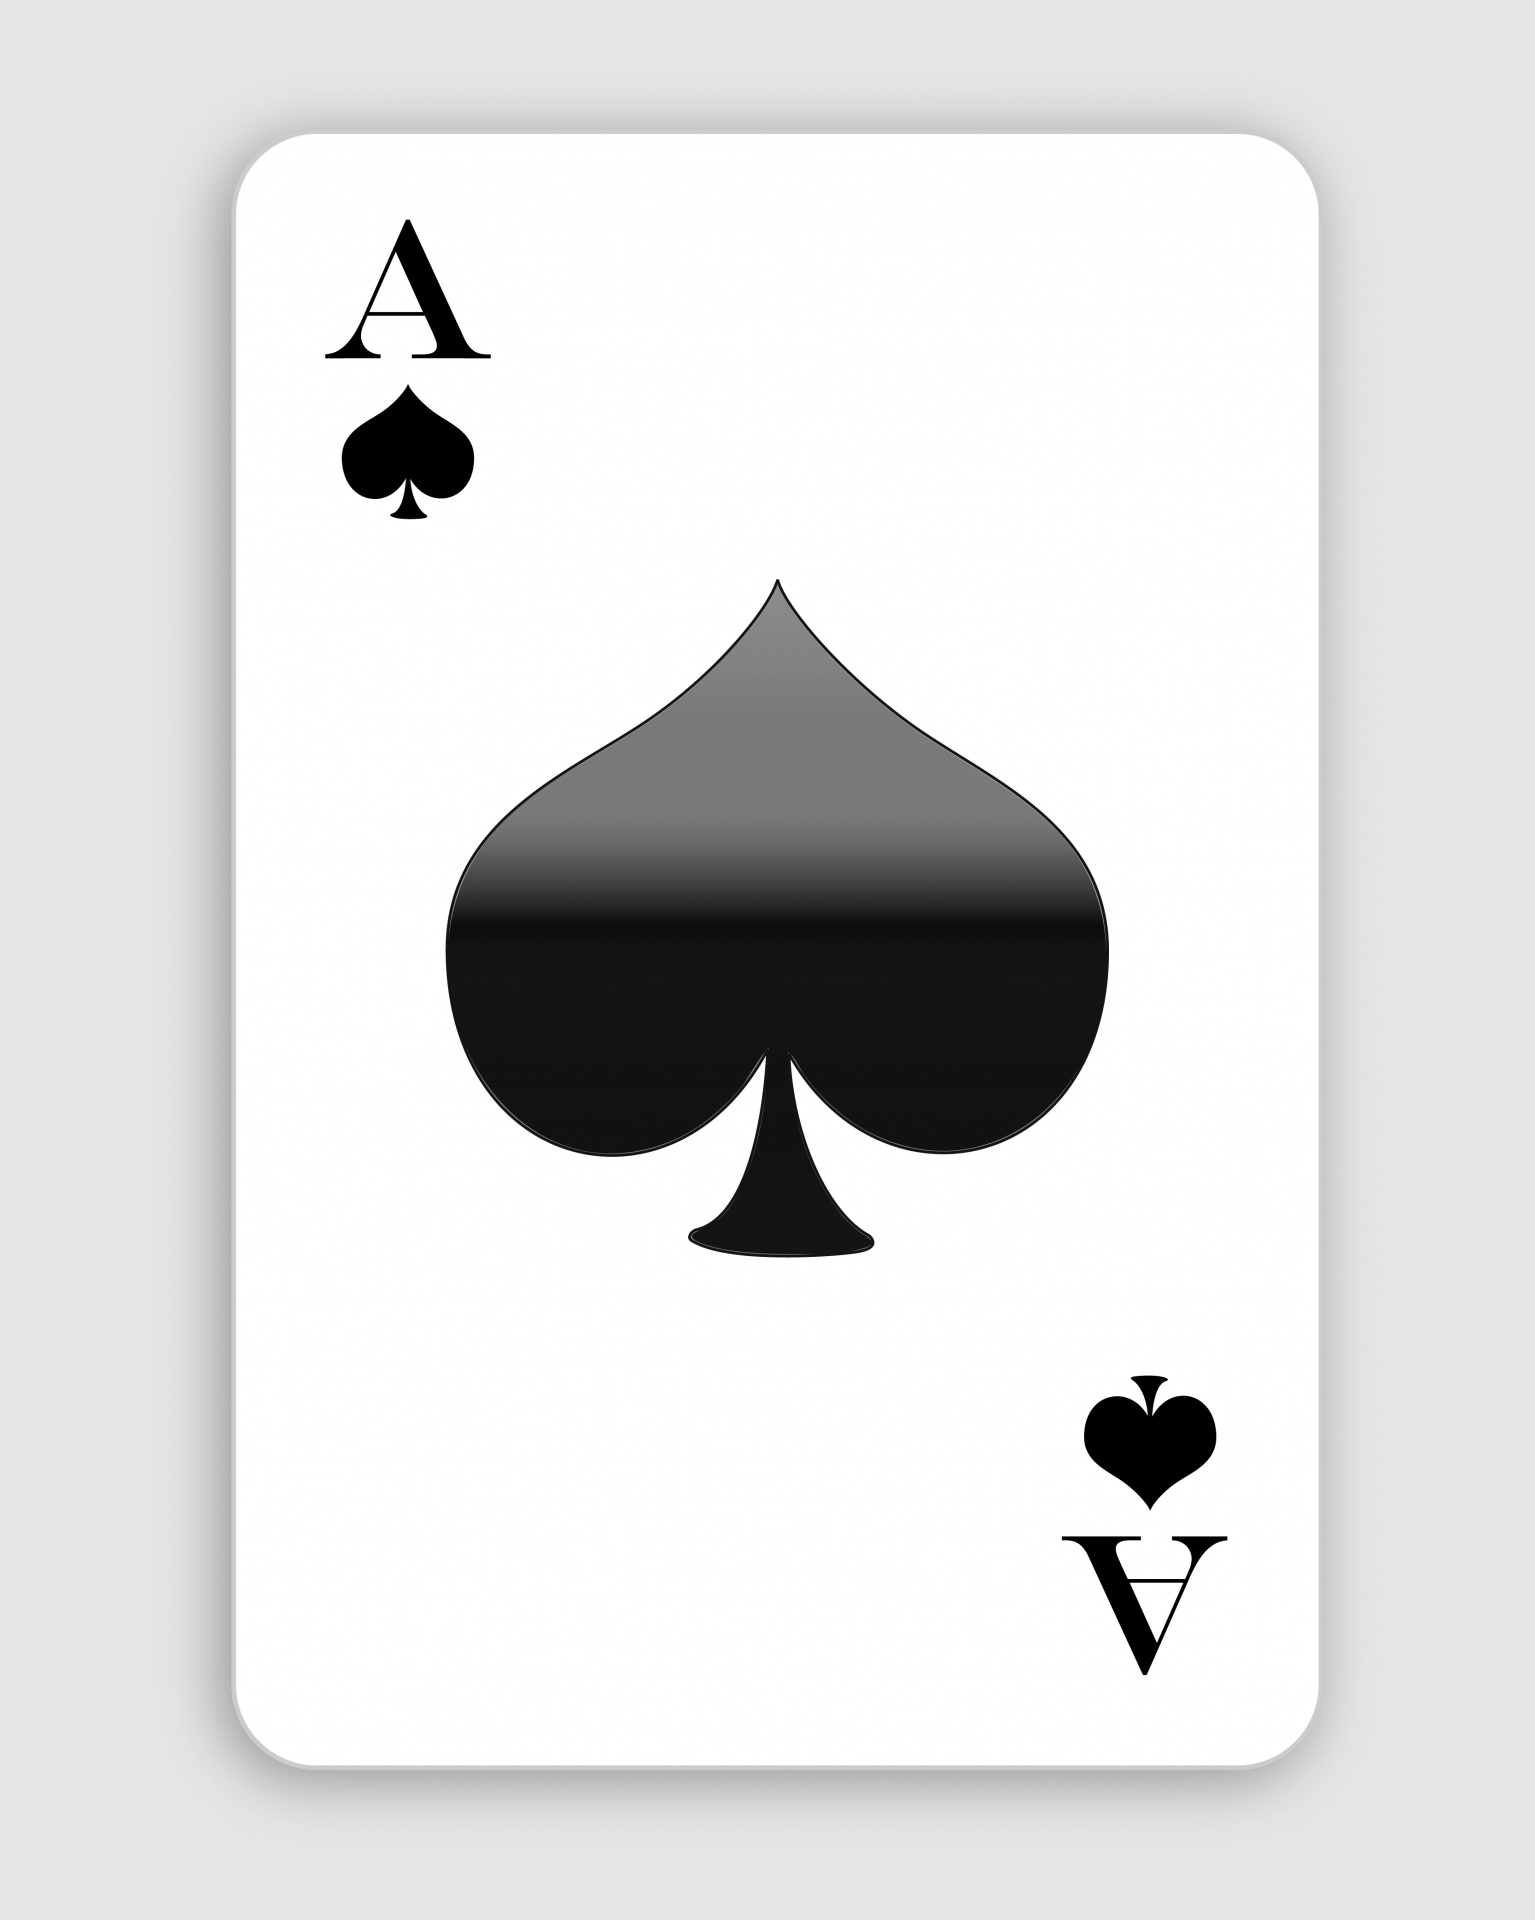 Ace of spades download premium key generator steam : senrane